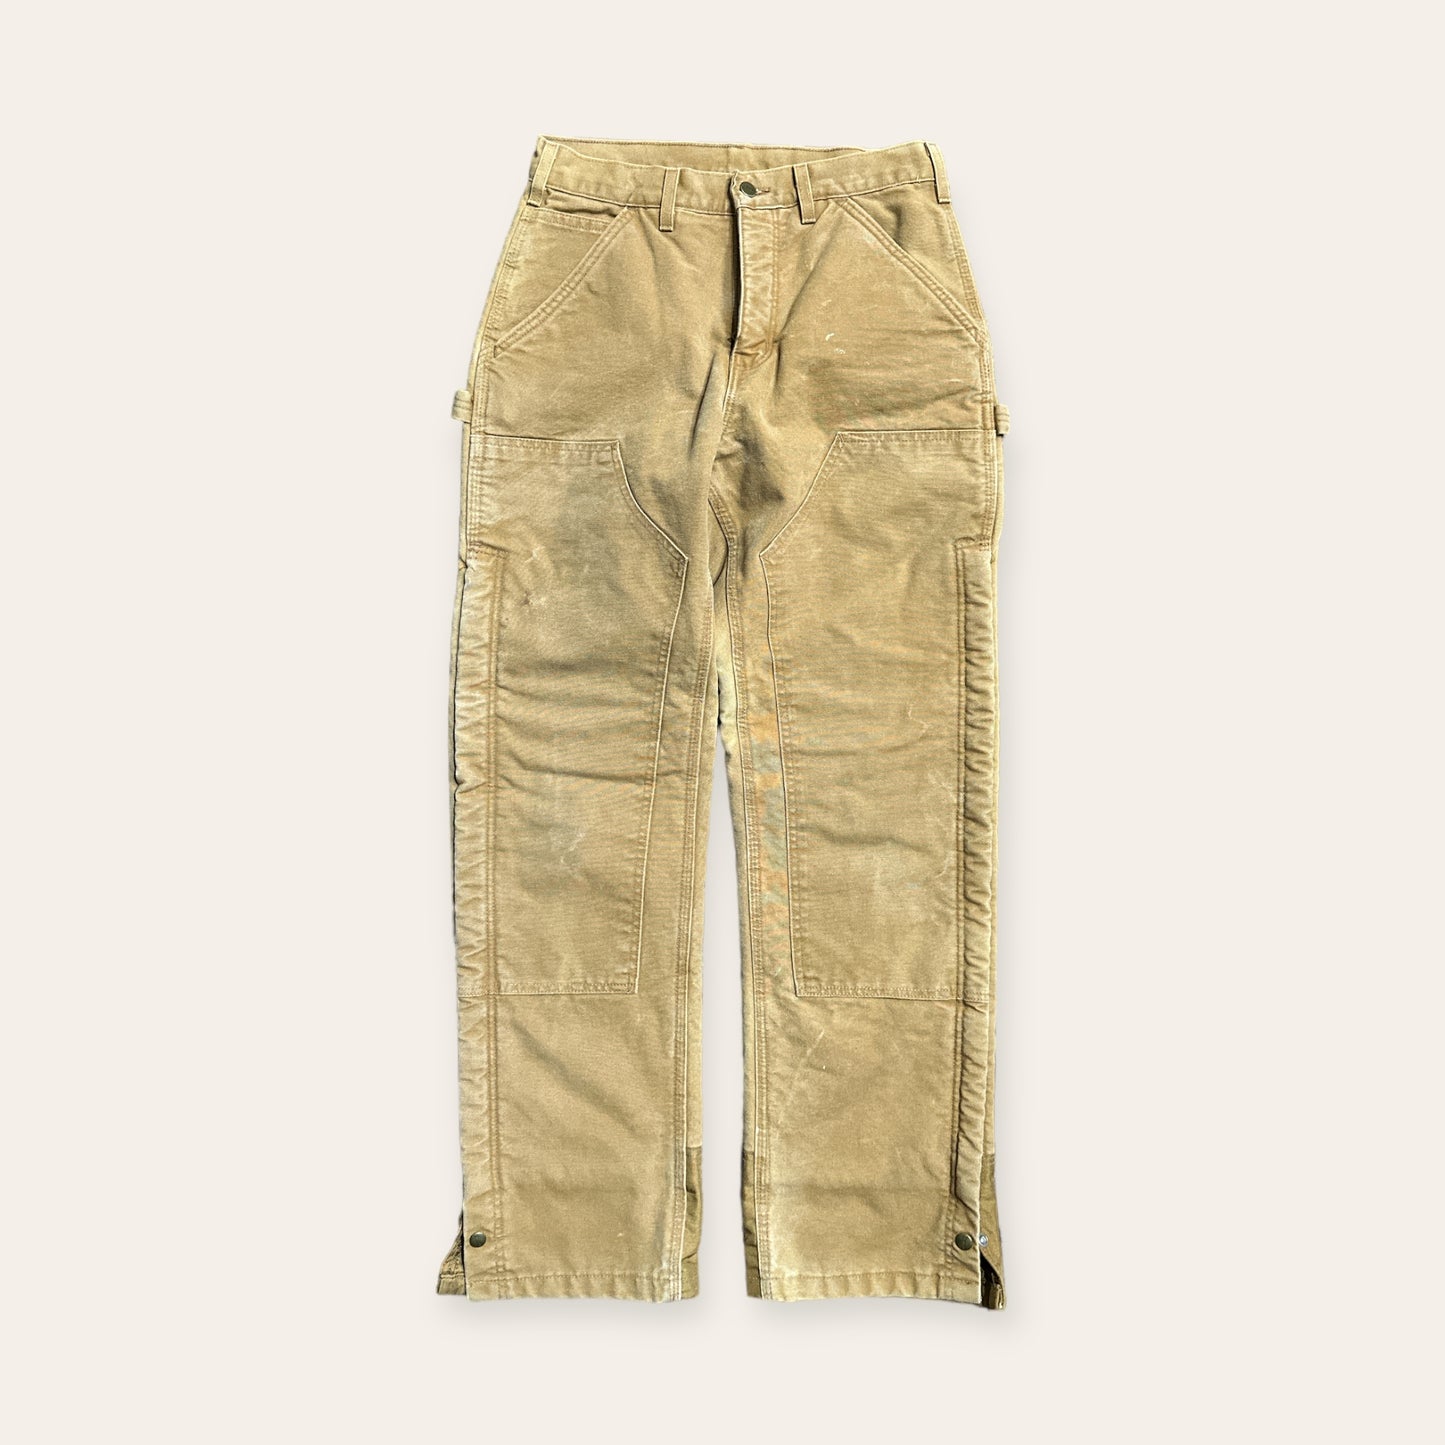 Carhartt Fleece Lined Double Knee Pants Size 30x32